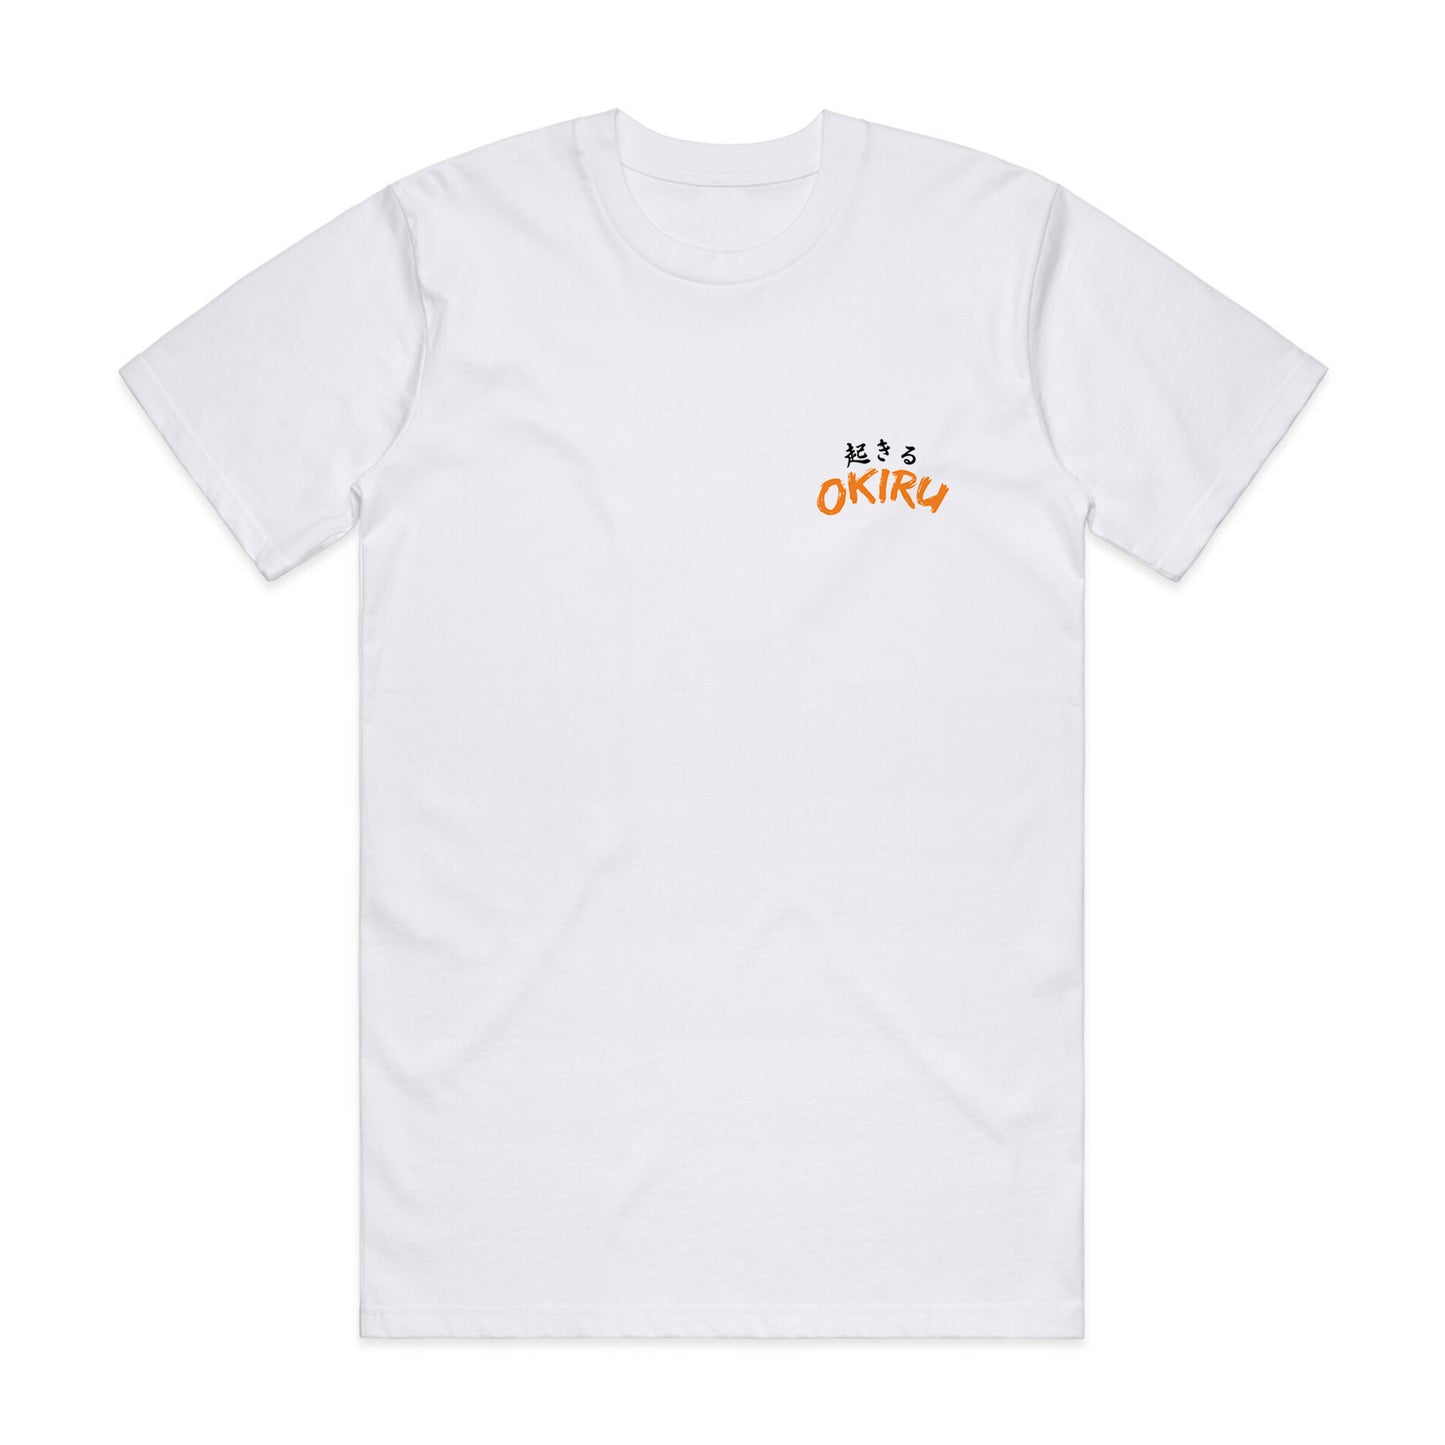 The Tiger Tee White - OKIRU T-shirt Unisex